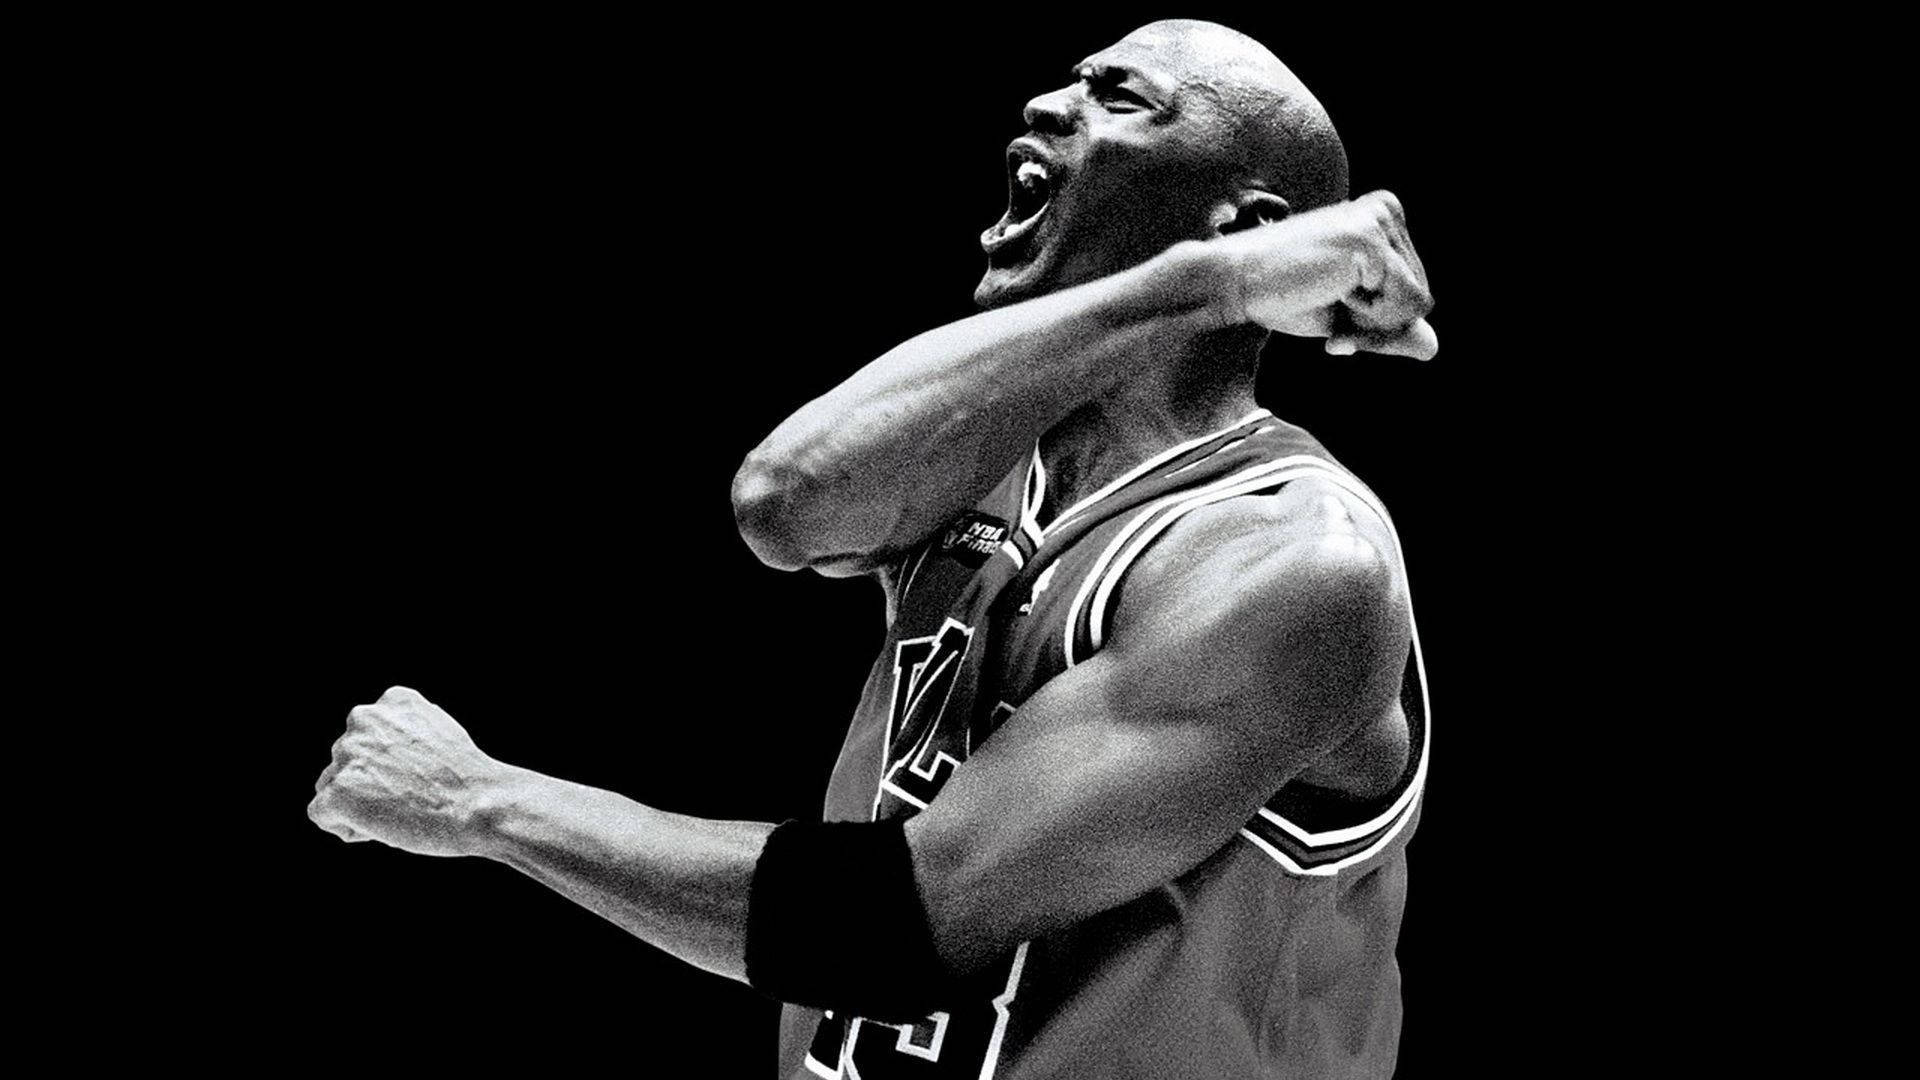 Michael Jordan Hd Shouting In Victory Picture